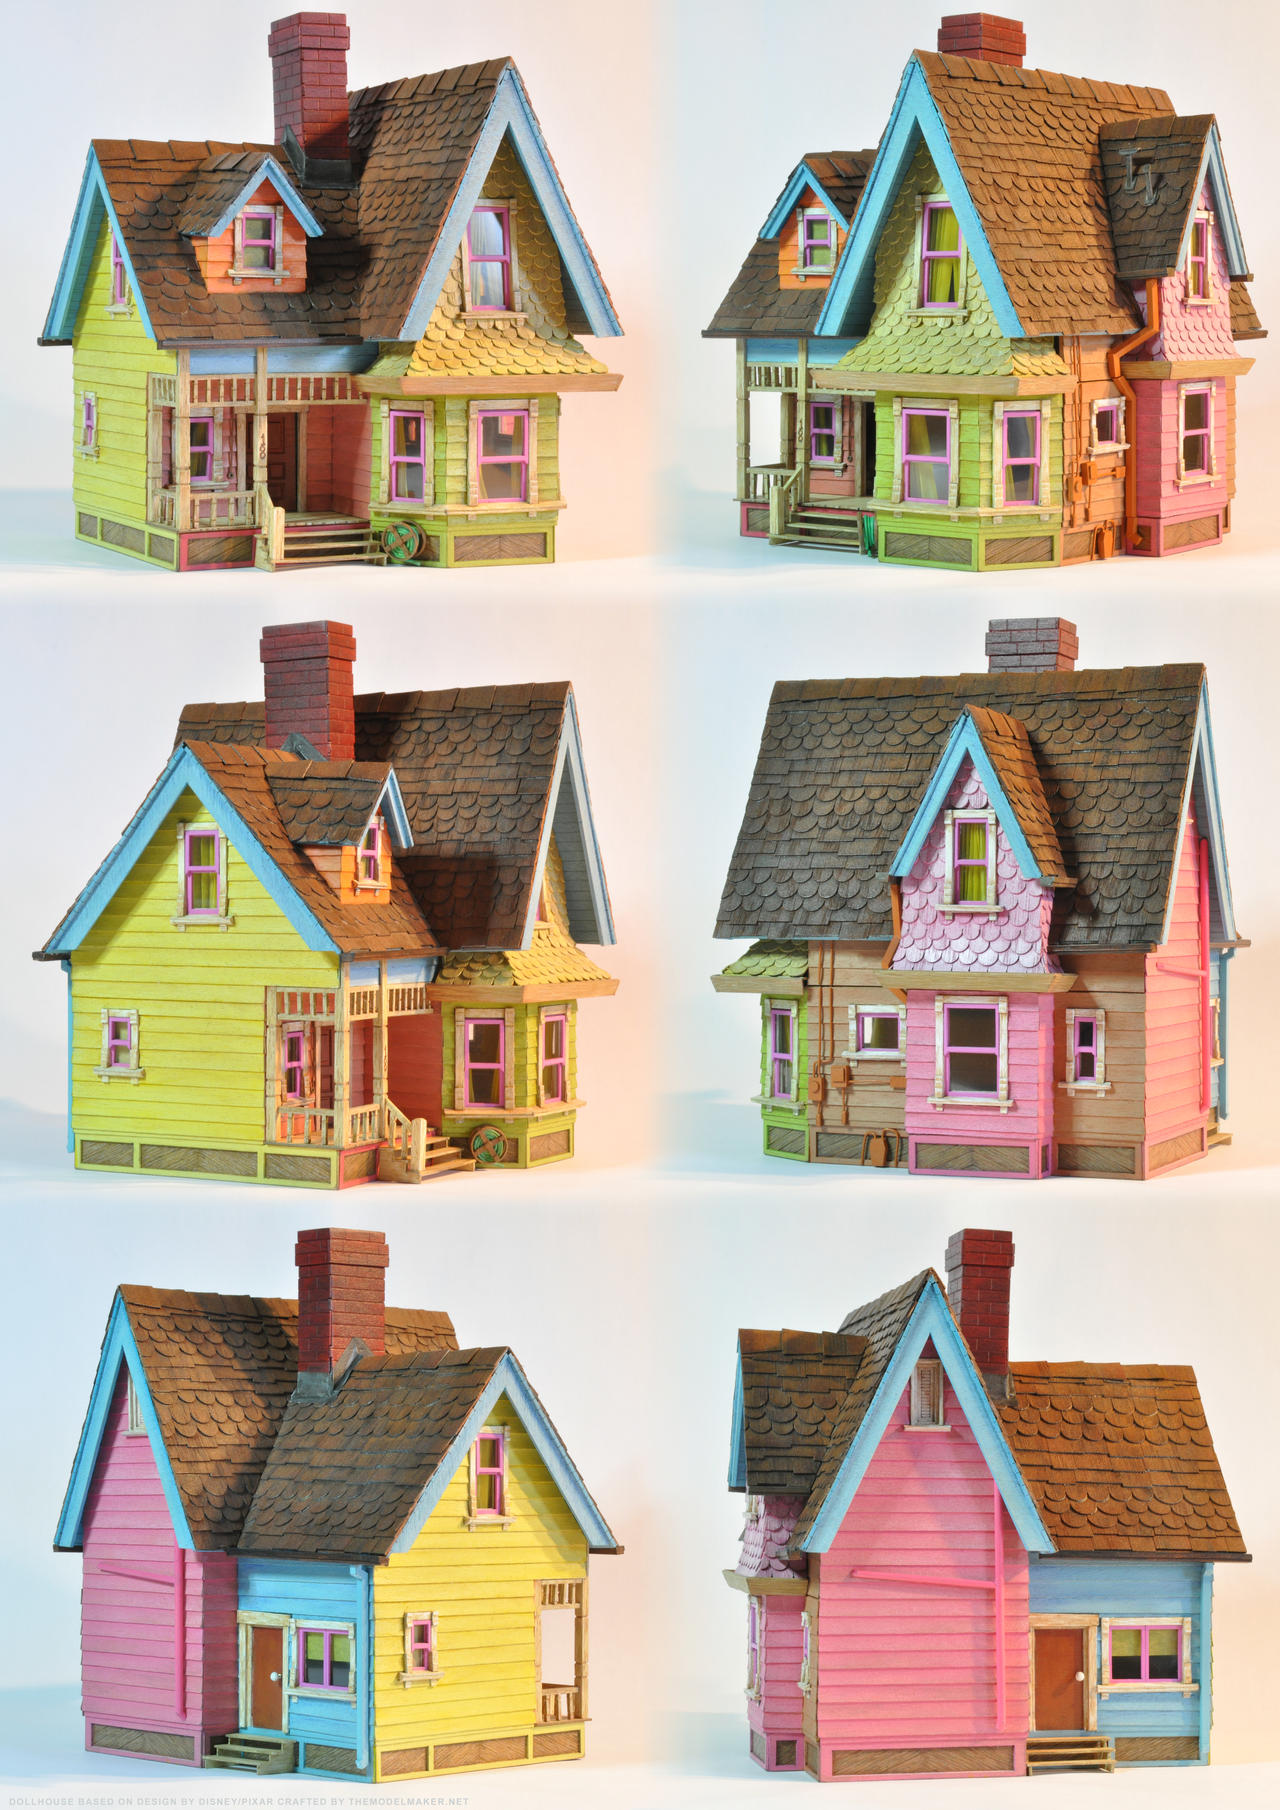 up-dollhouse-poster-by-artmik-on-deviantart-disney-up-house